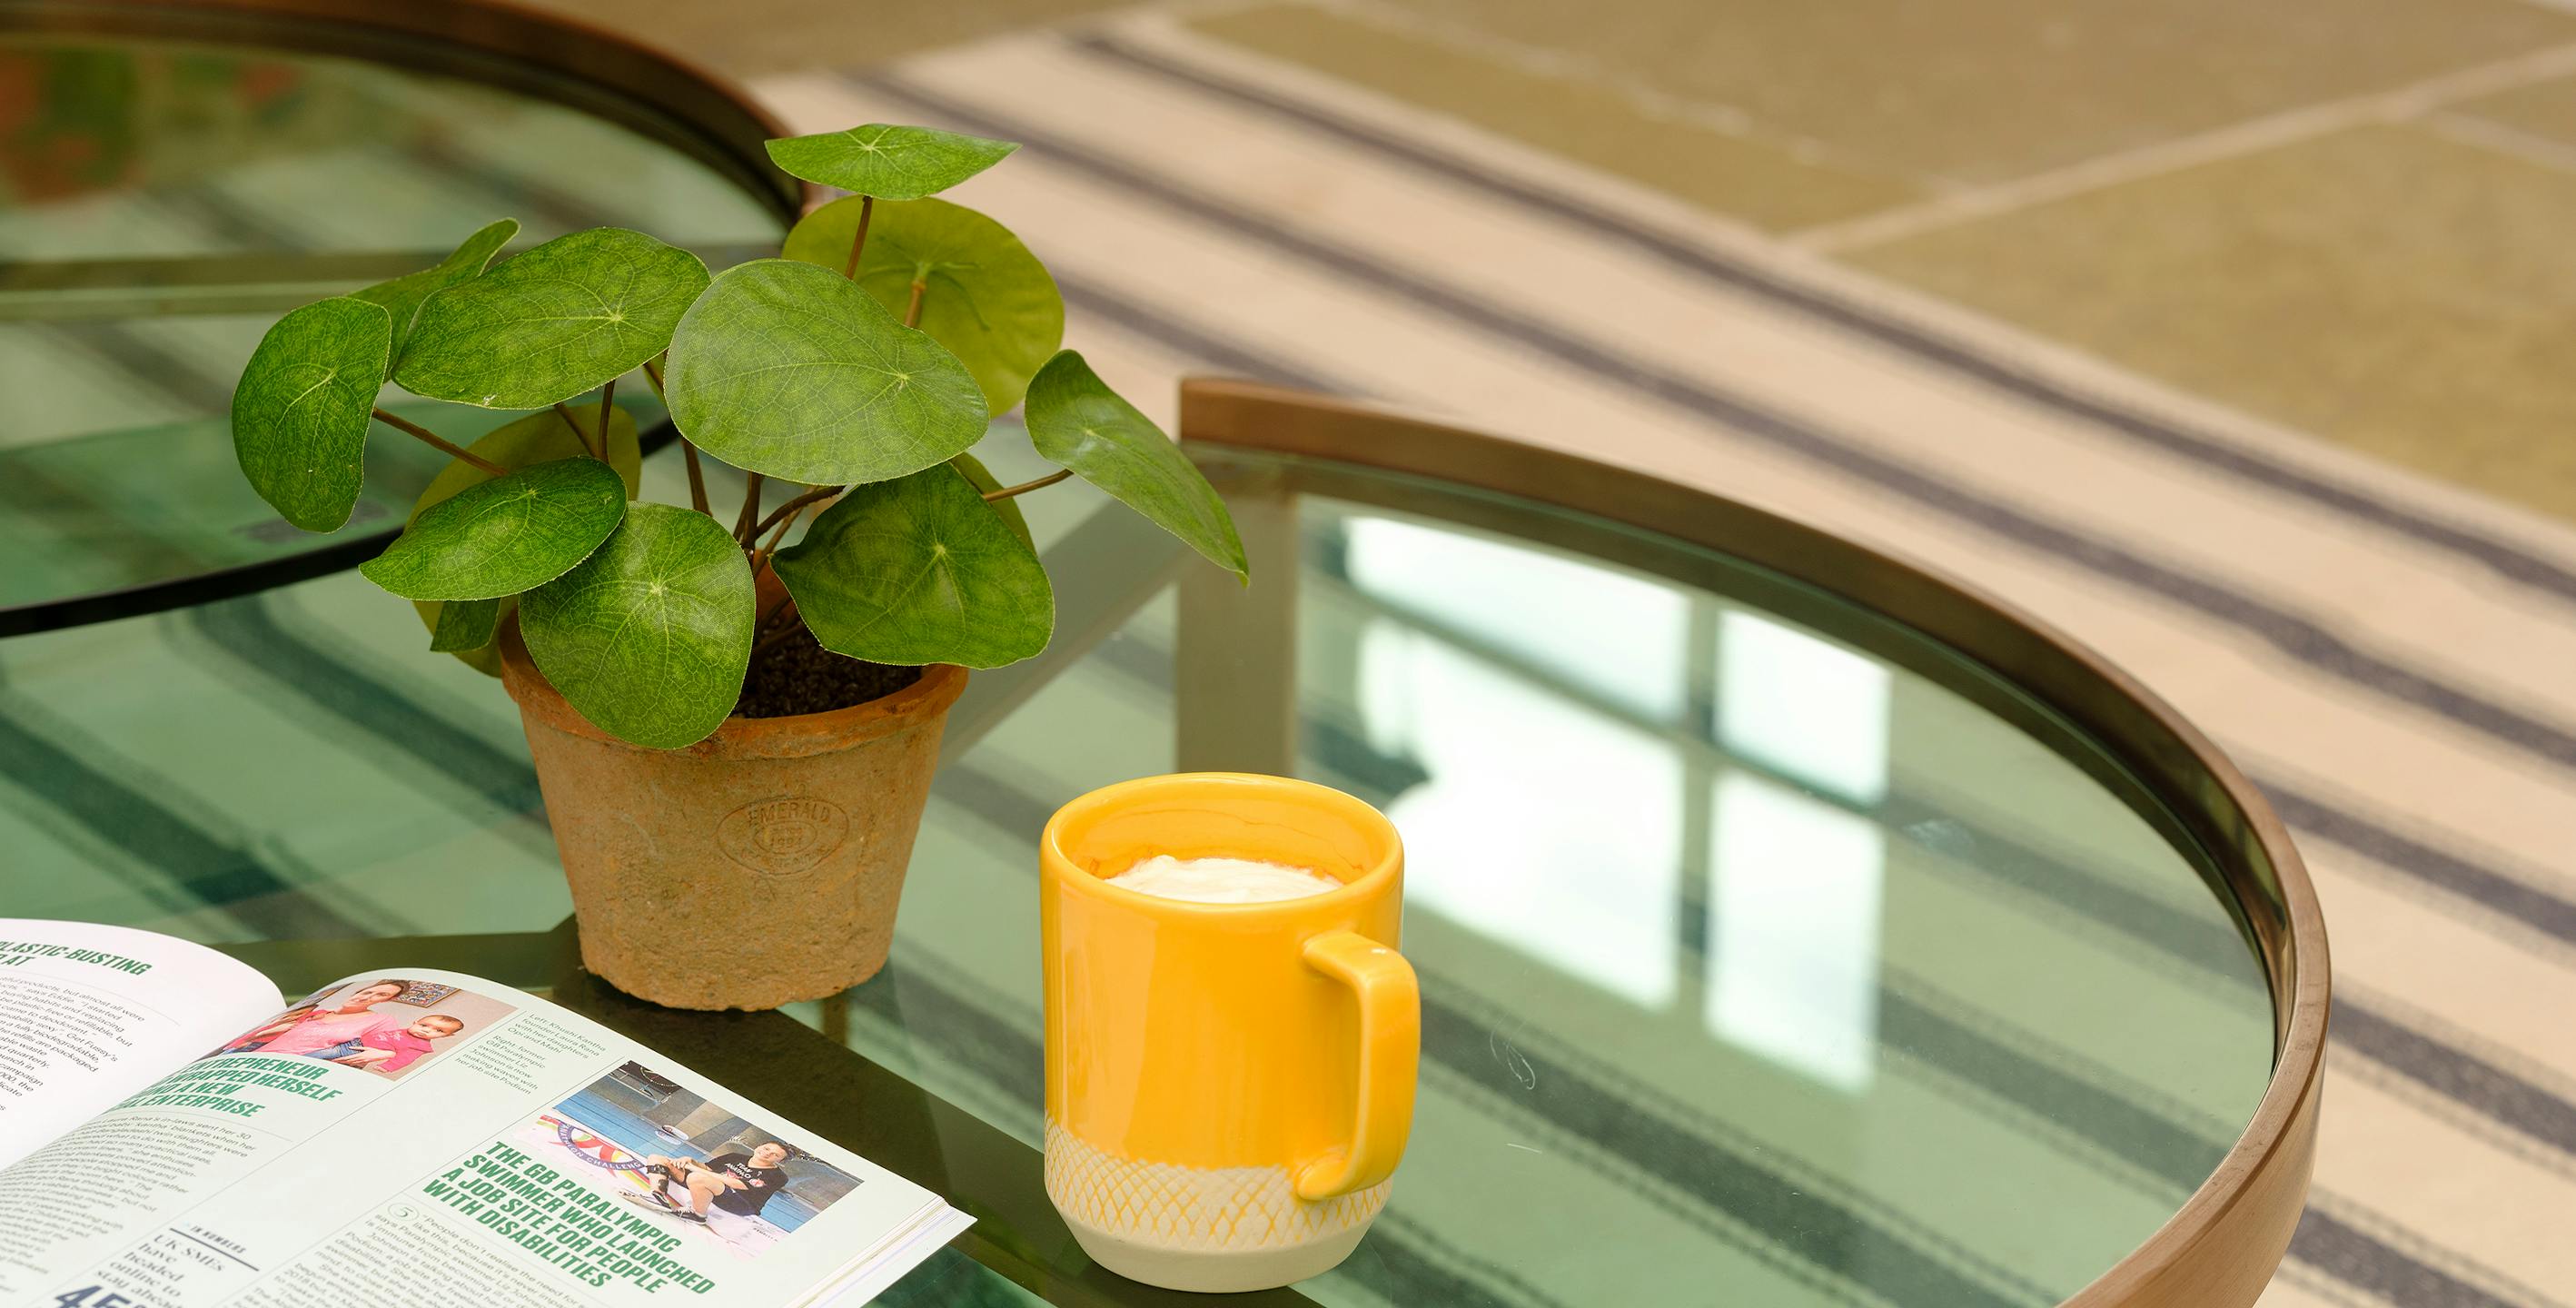 Artificial pilea bush on coffee table